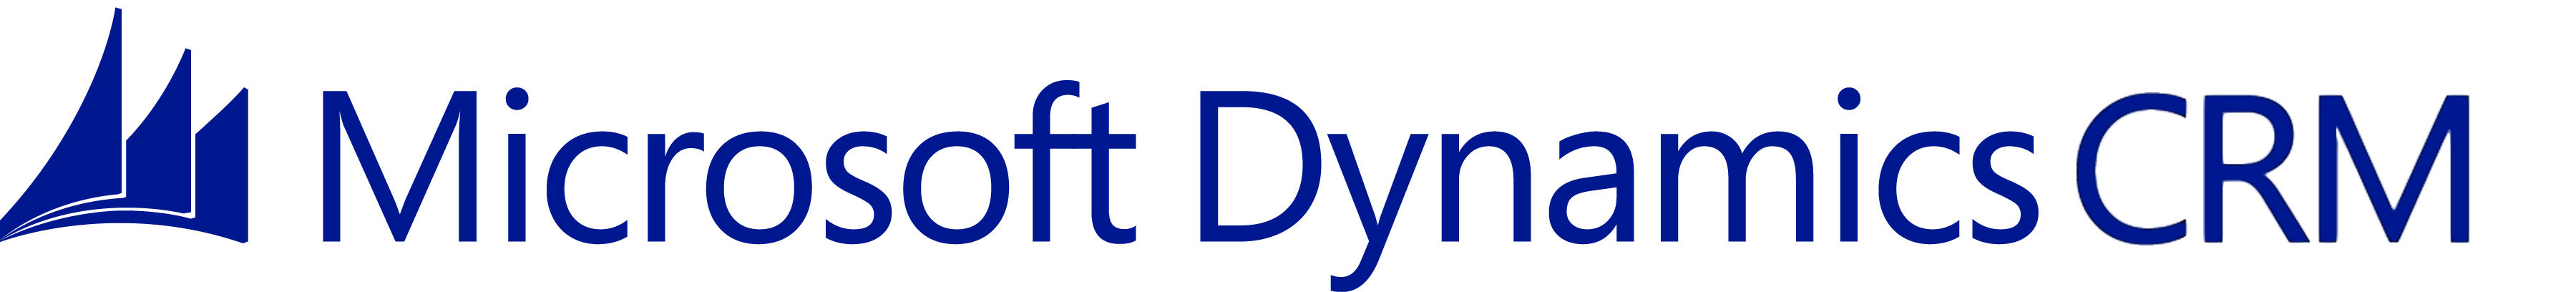 Microsoft Dynamics Crm 2013 Logo Logodix 8819